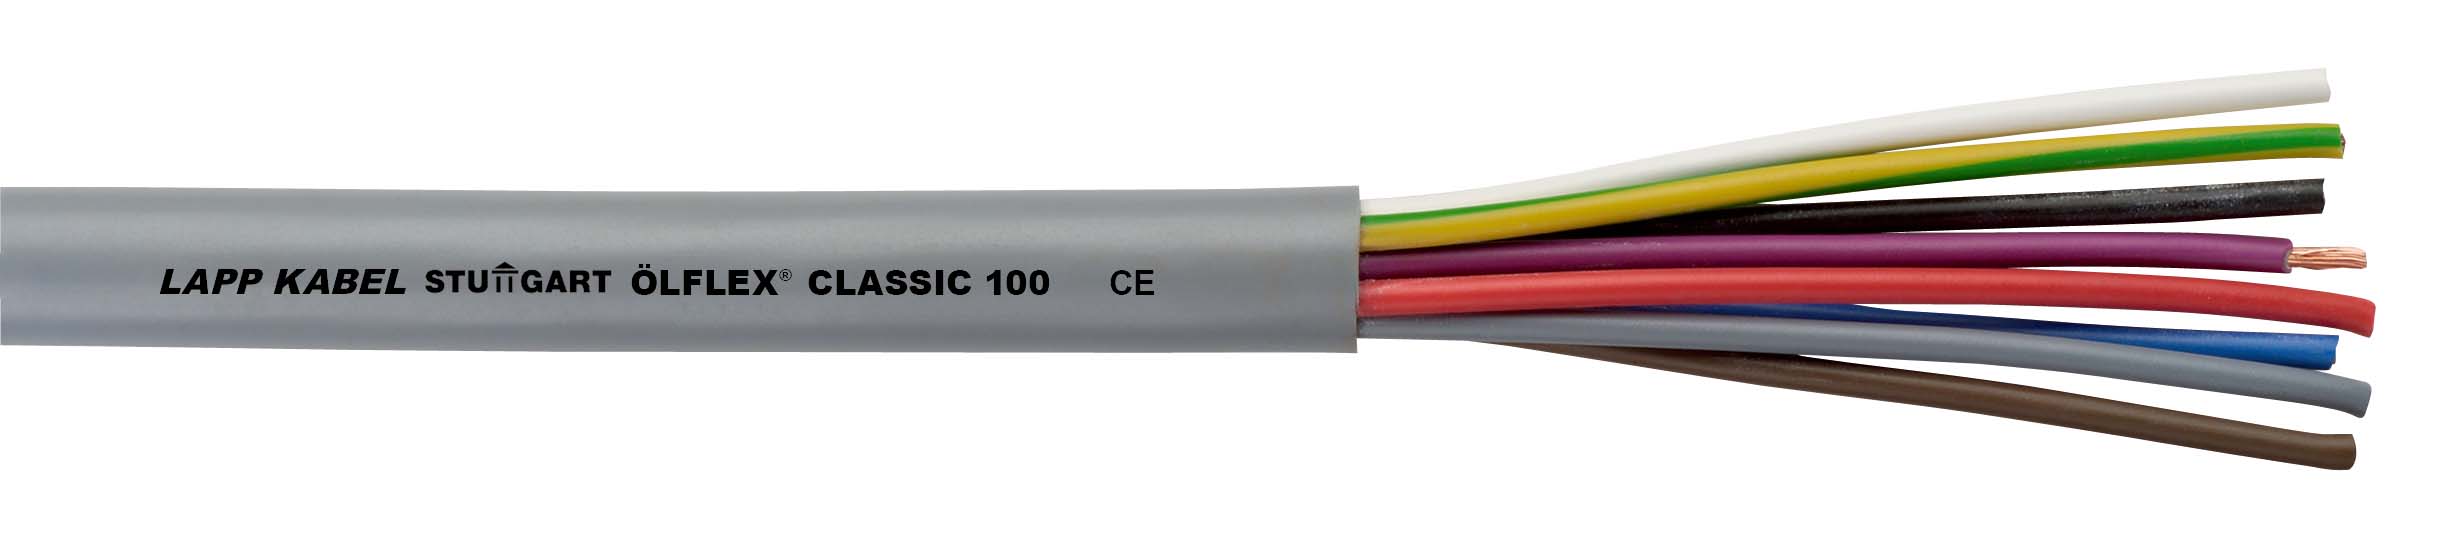 Lapp Kabel&Leitung ÖLFLEX CLASSIC 100 3G2,5 0010087 T500